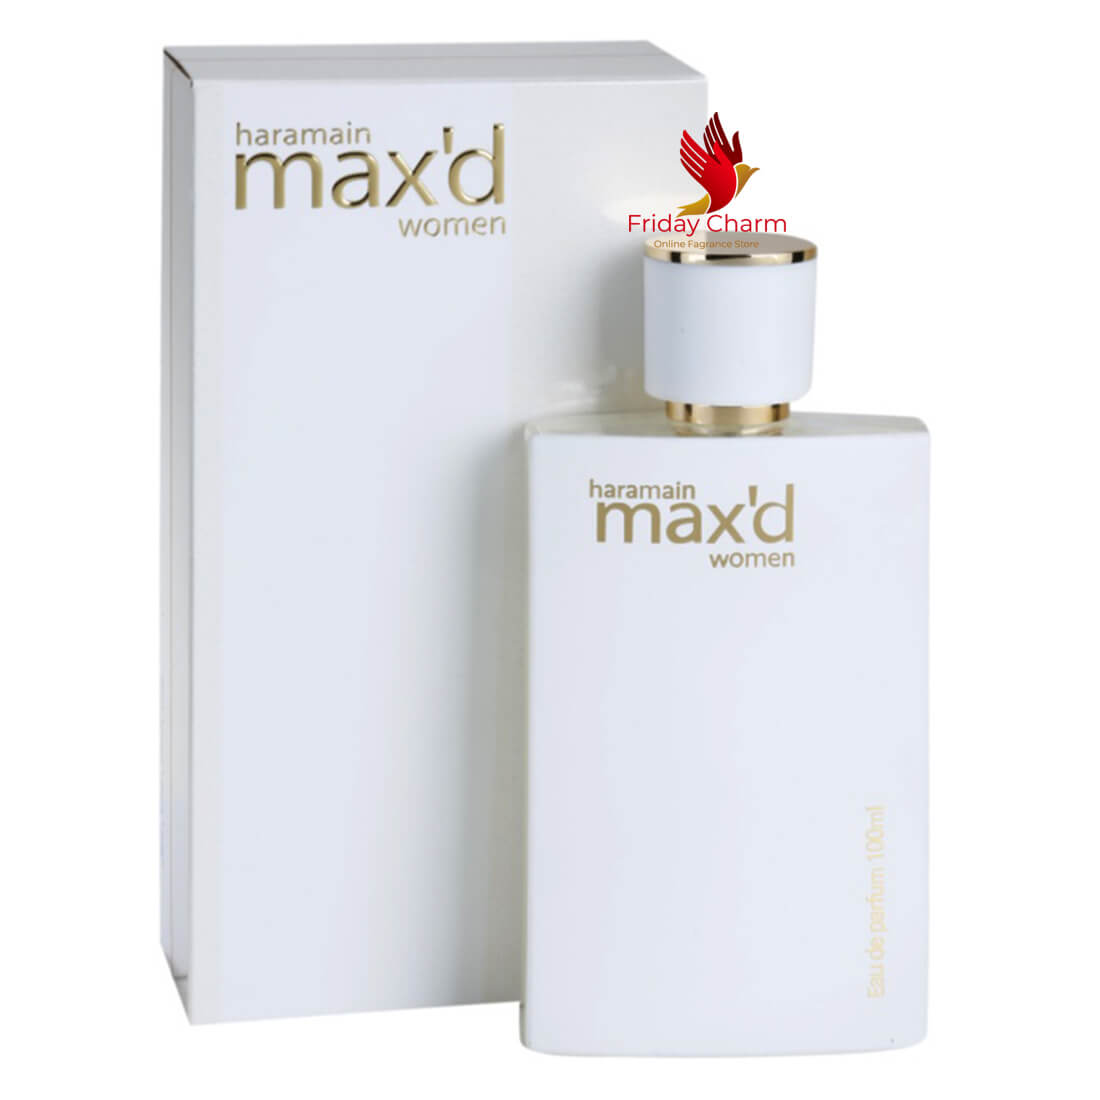 Al Haramain Max'd Perfume Spray - 100ml